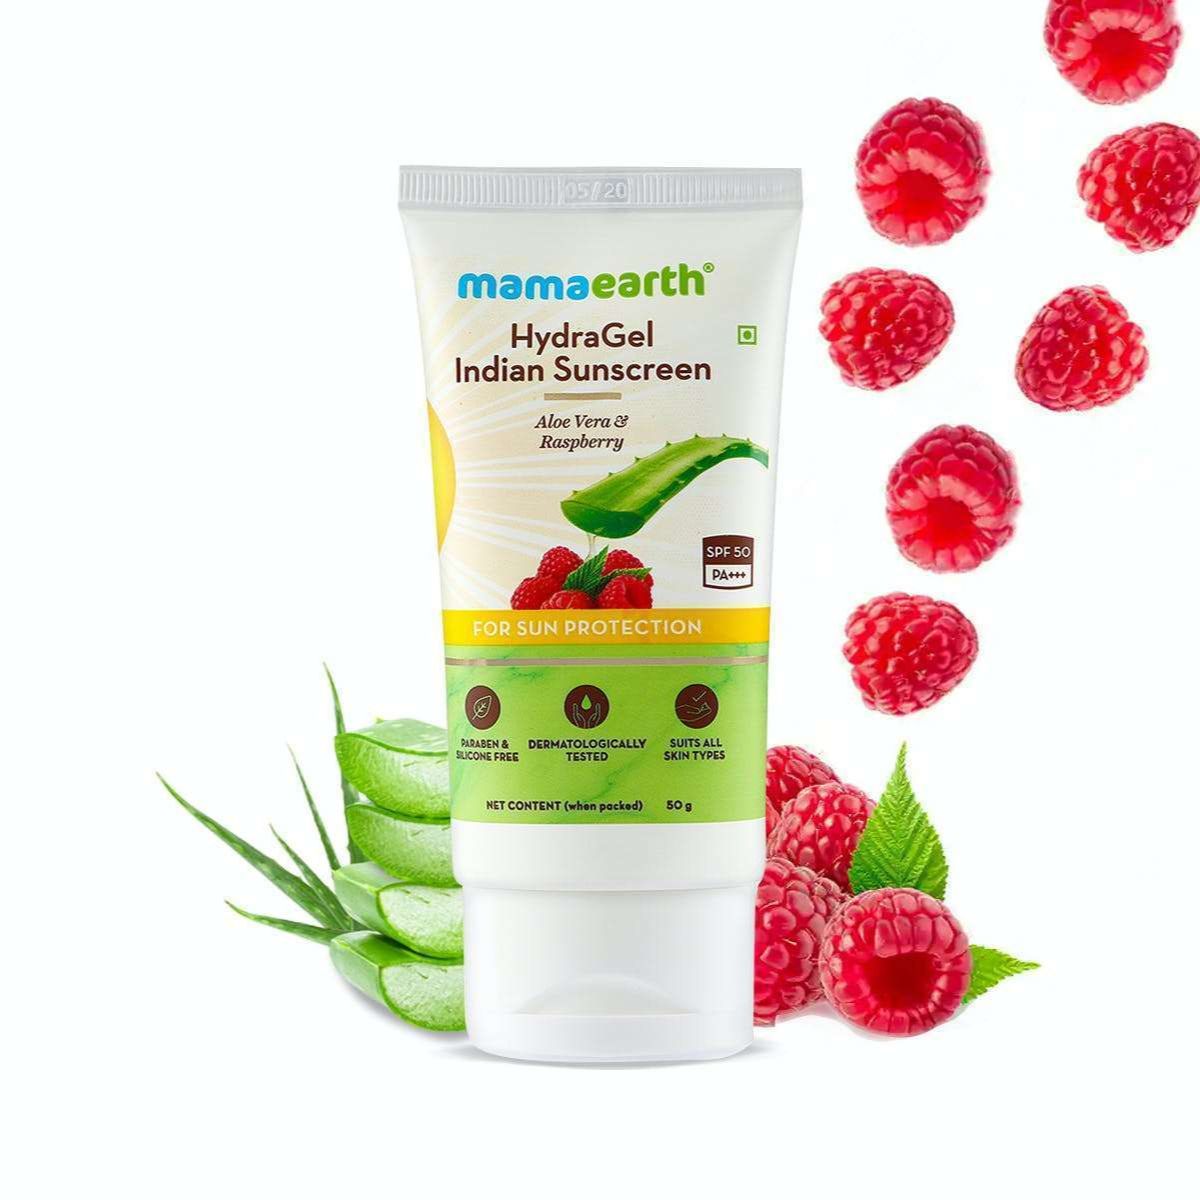 Mamaearth Hydra-Gel Indian Sunscreen with Aloe Vera & Raspberry - 50g